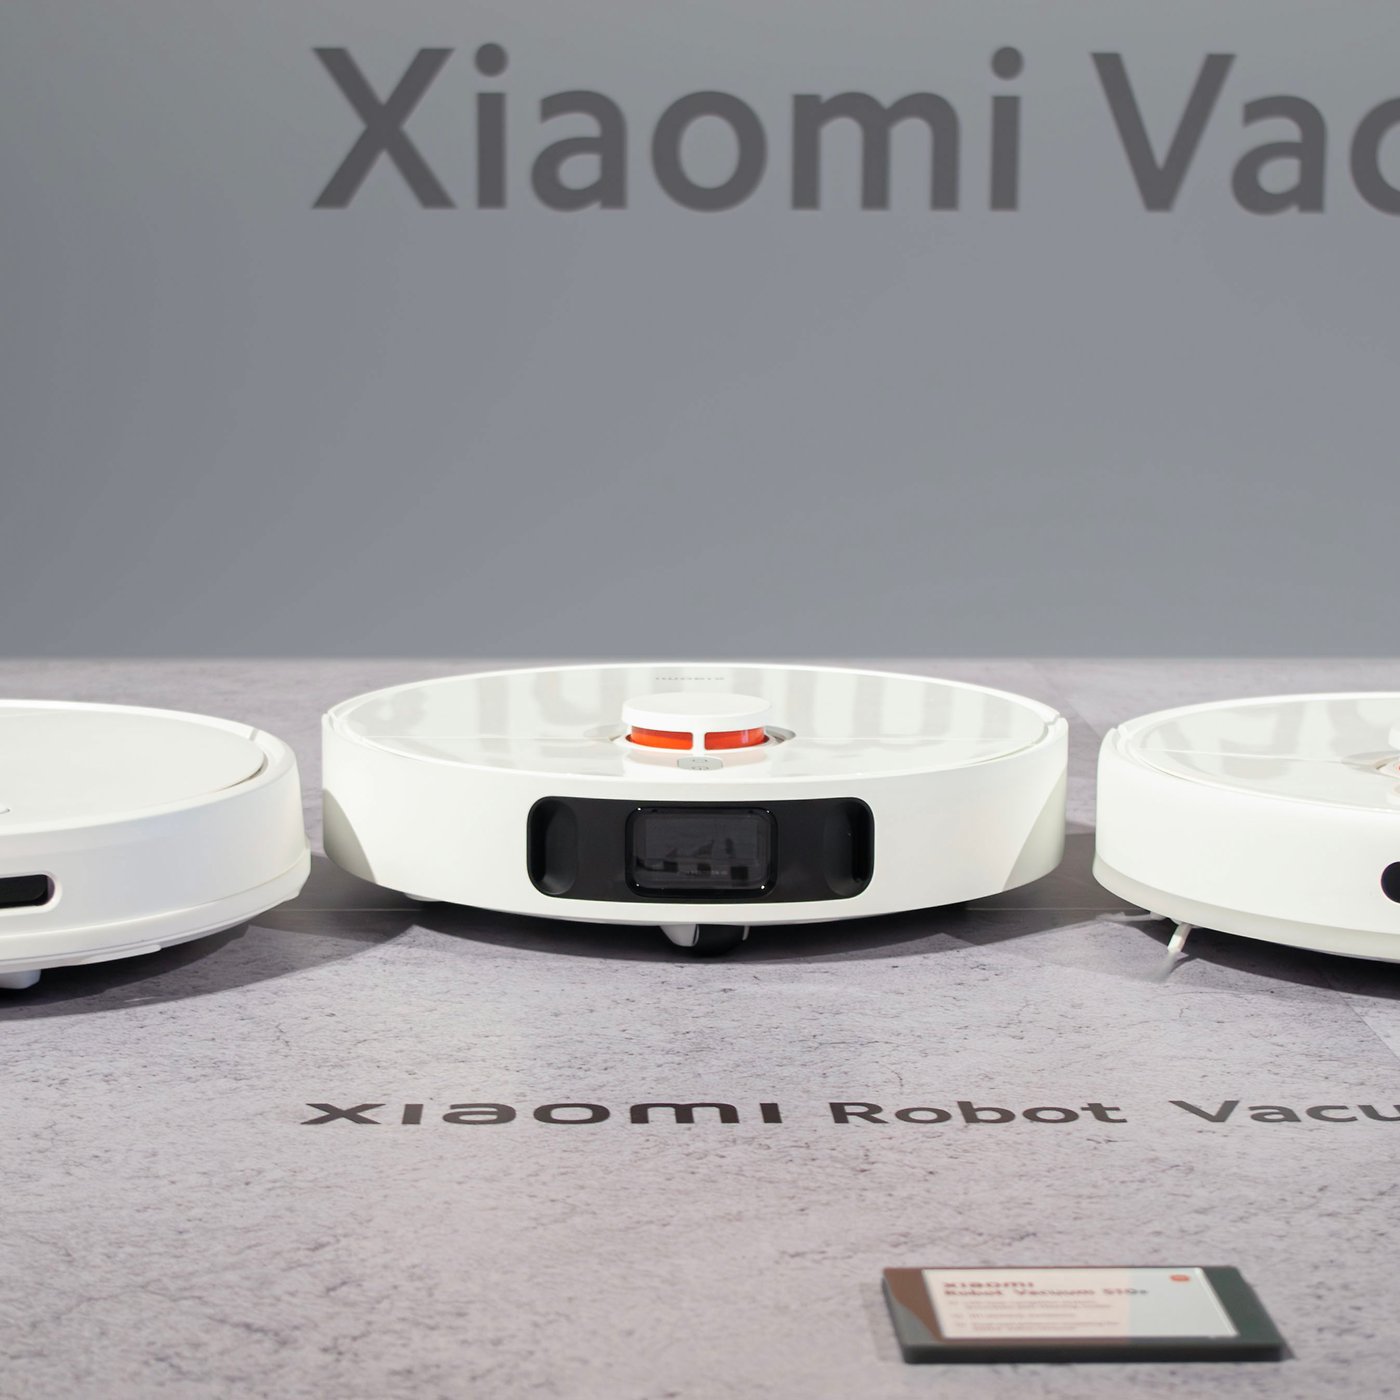 Xiaomi launches Robot Vacuum Cleaner X10+ in Europe